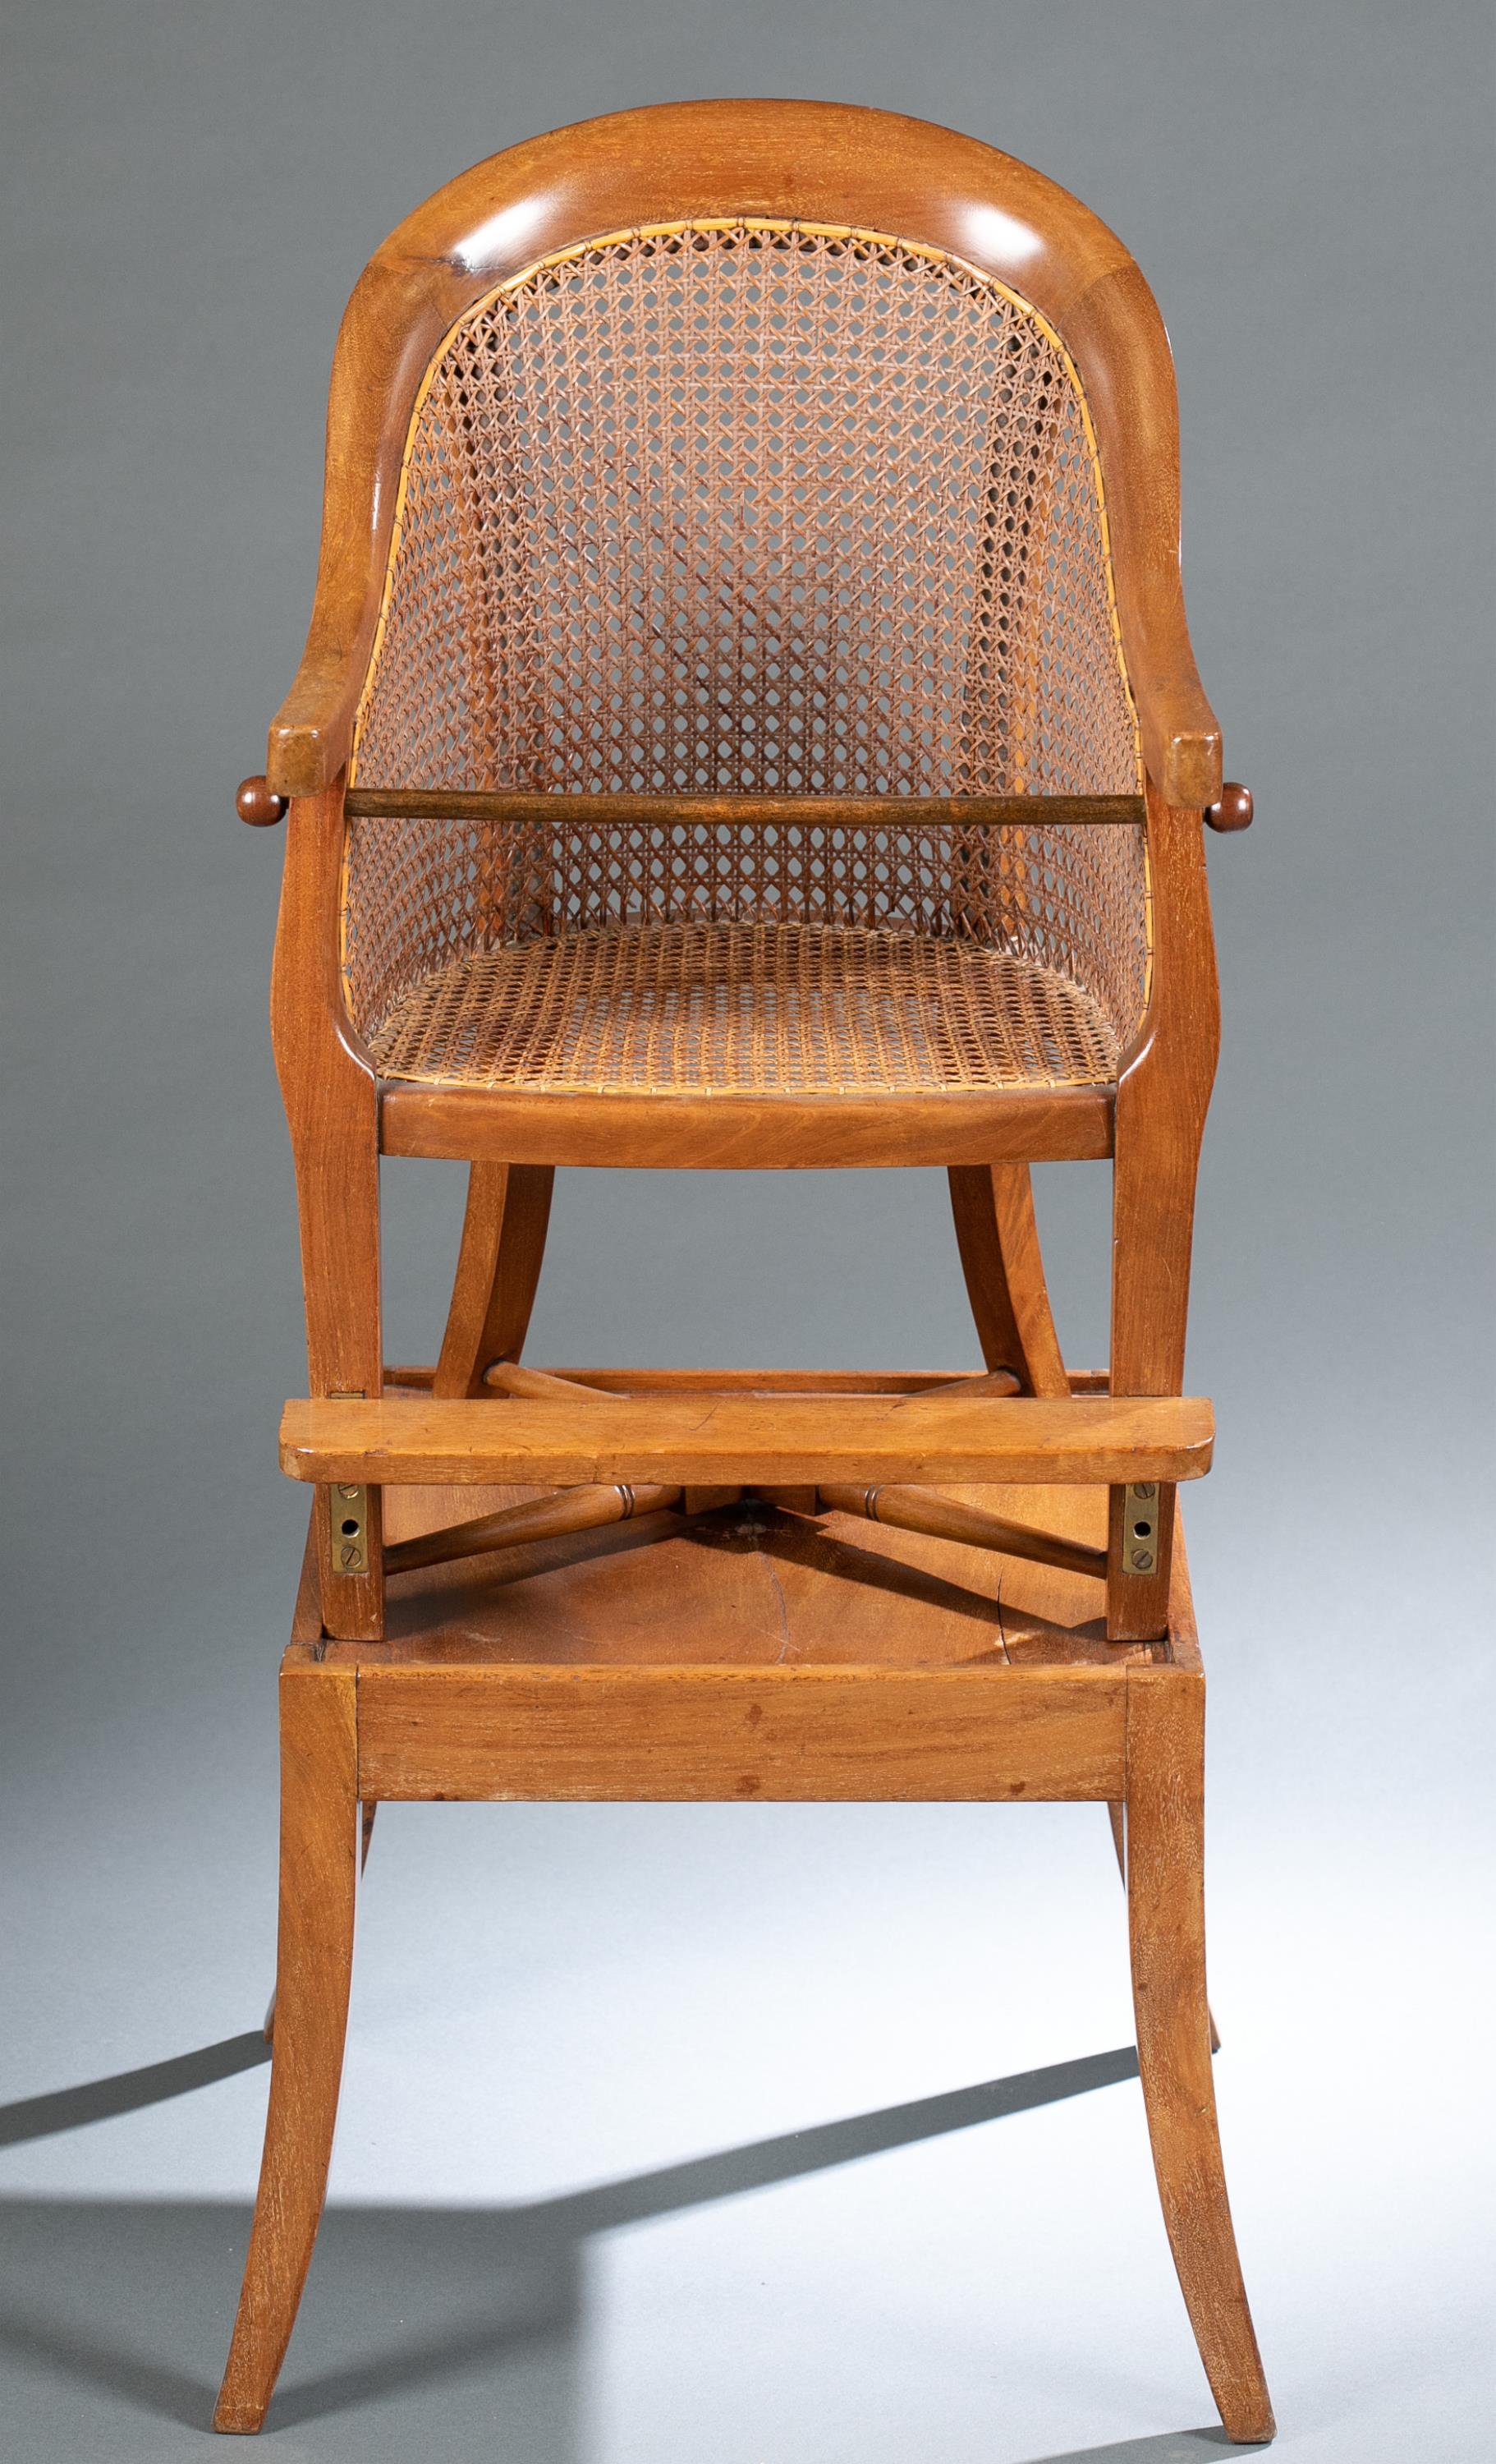 Mahogany child's chair, mid 19th c.